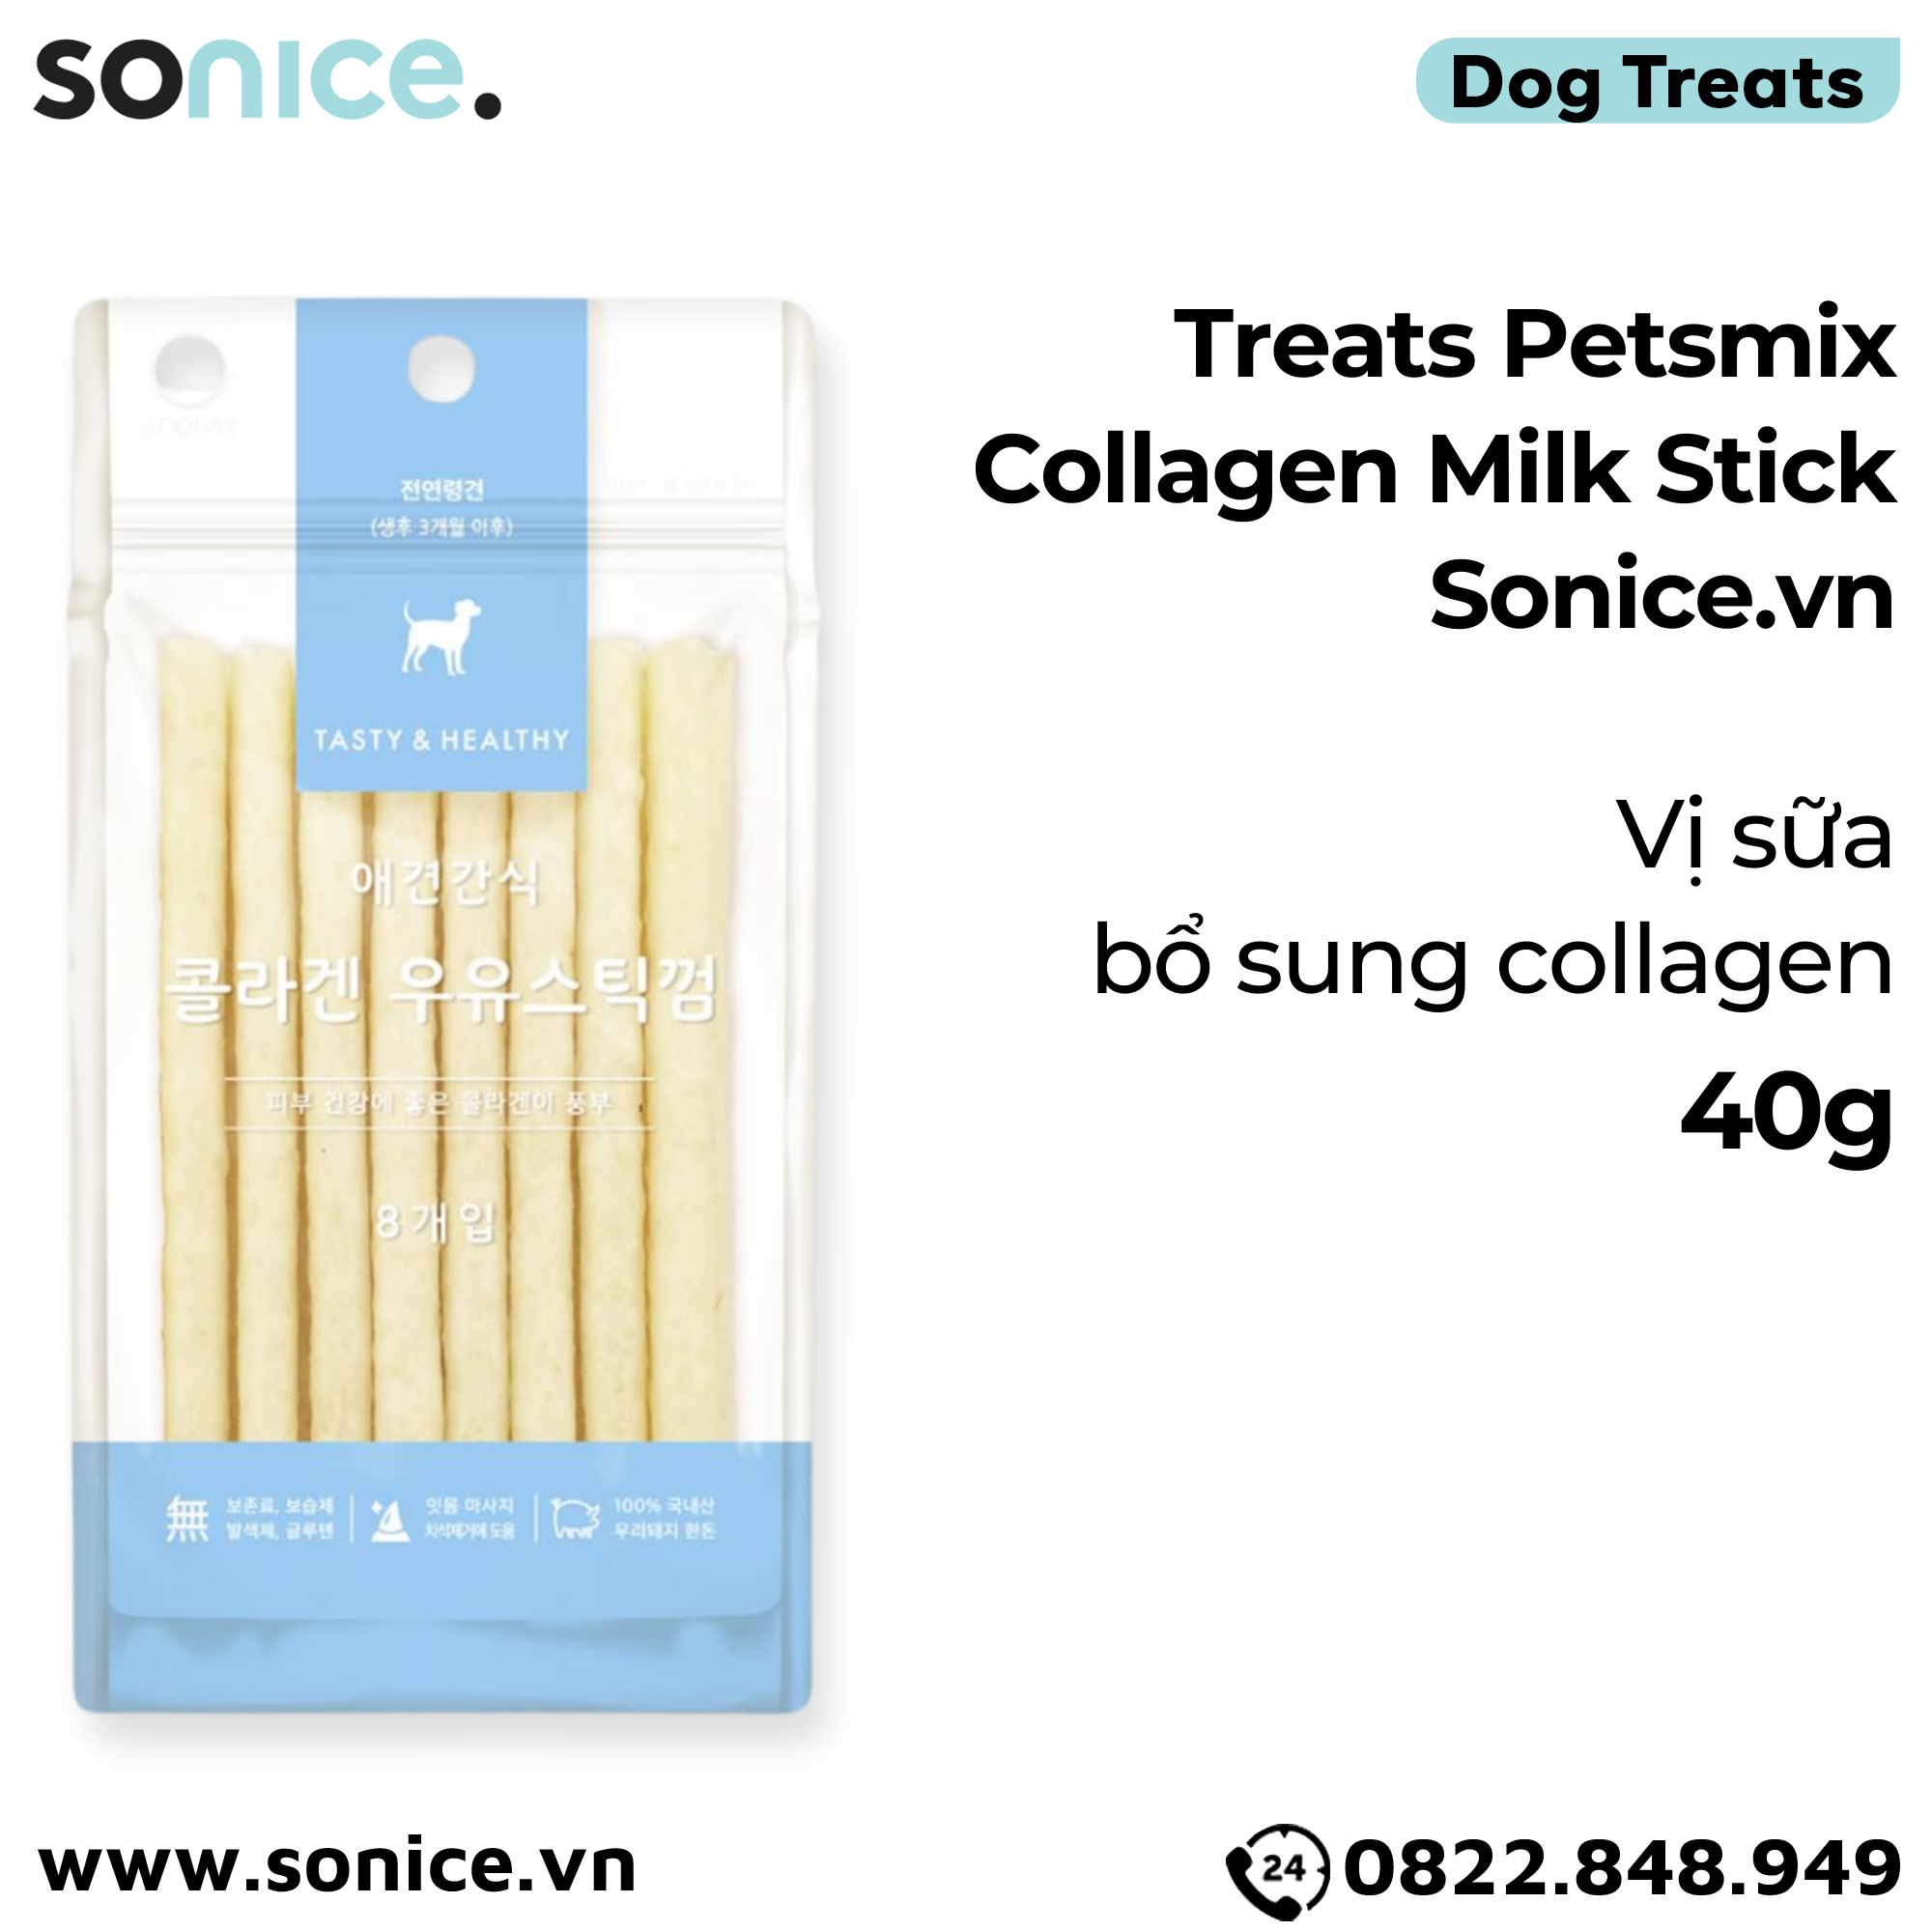  Treats Petsmix Collagen Milk Stick 40g - Vị sữa, bổ sung collagen SONICE. 